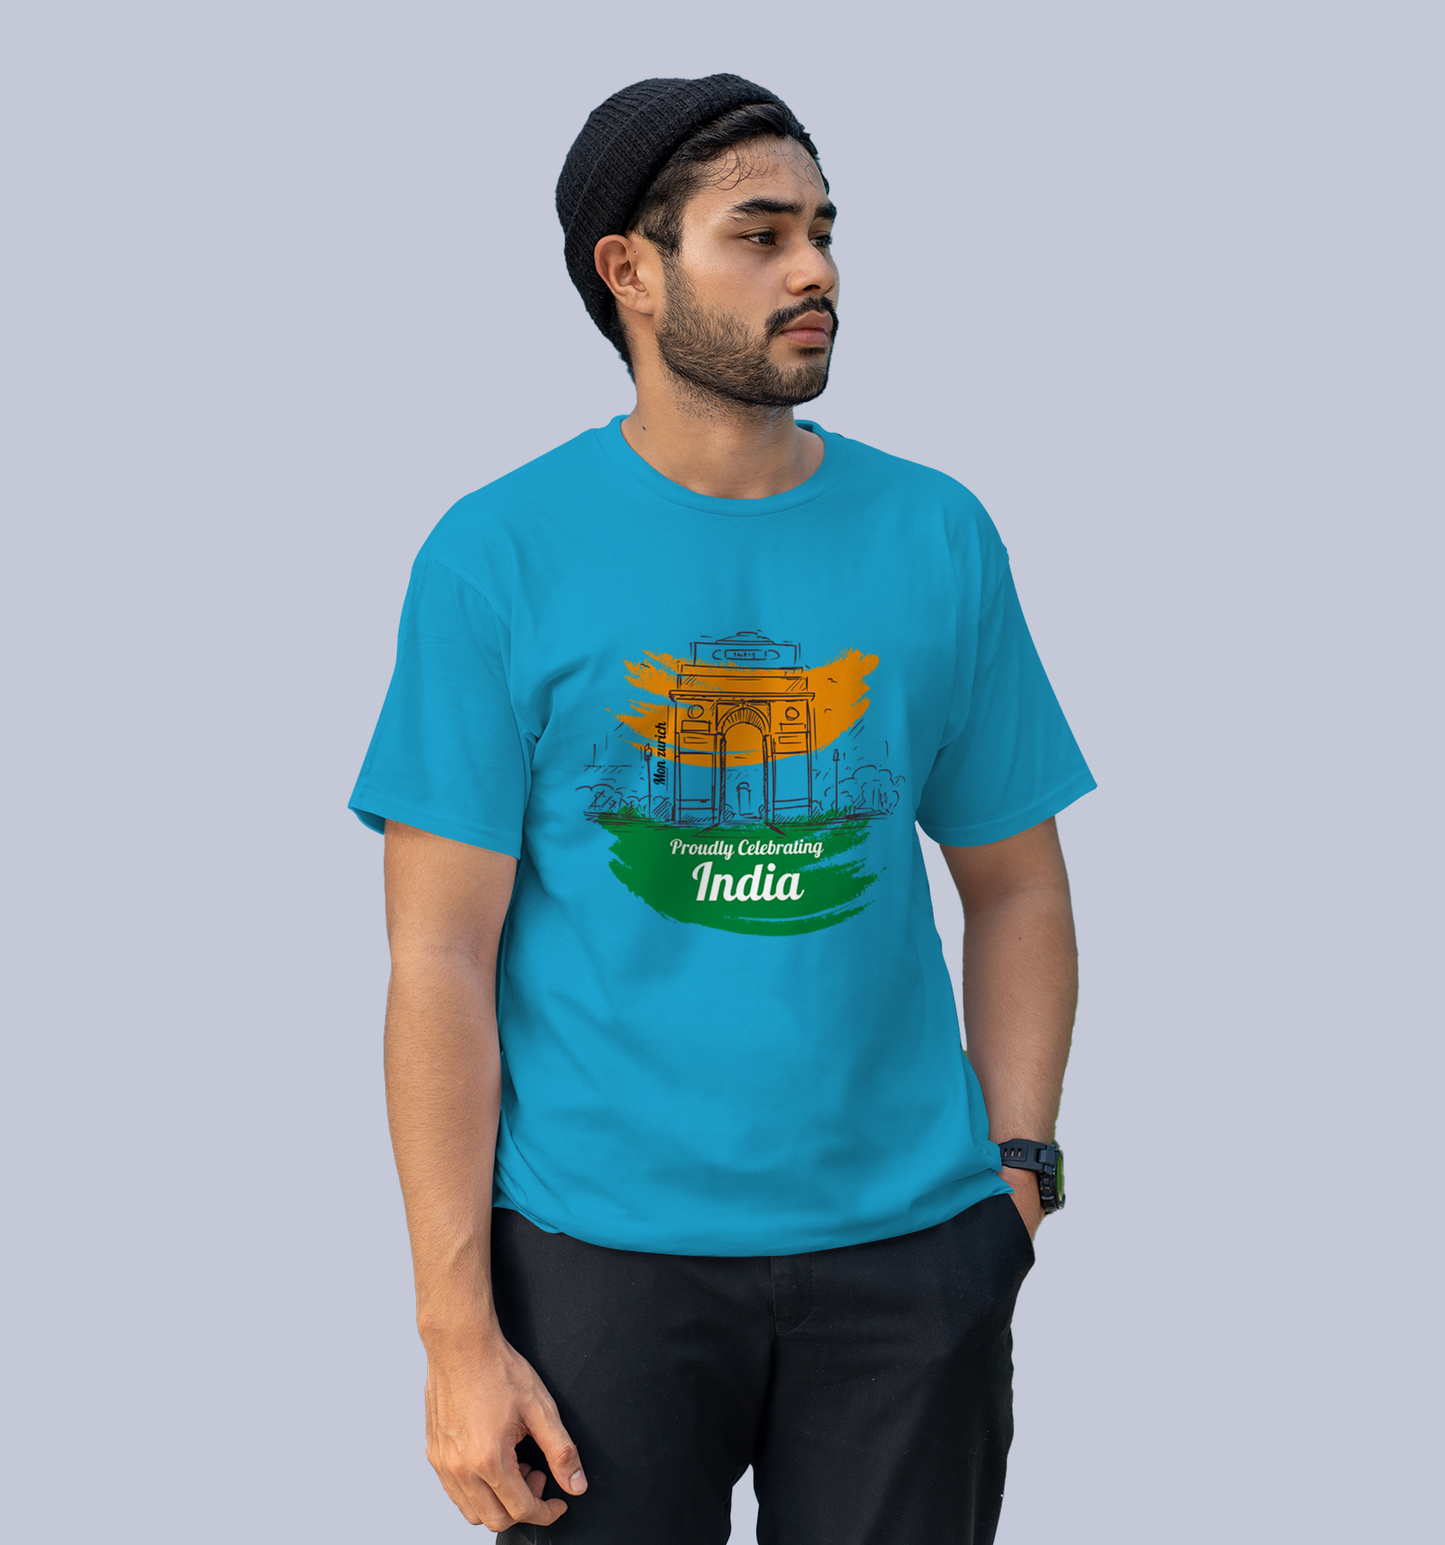 Proudly Celebrating India T-Shirt In Light - Mon Zurich Originals